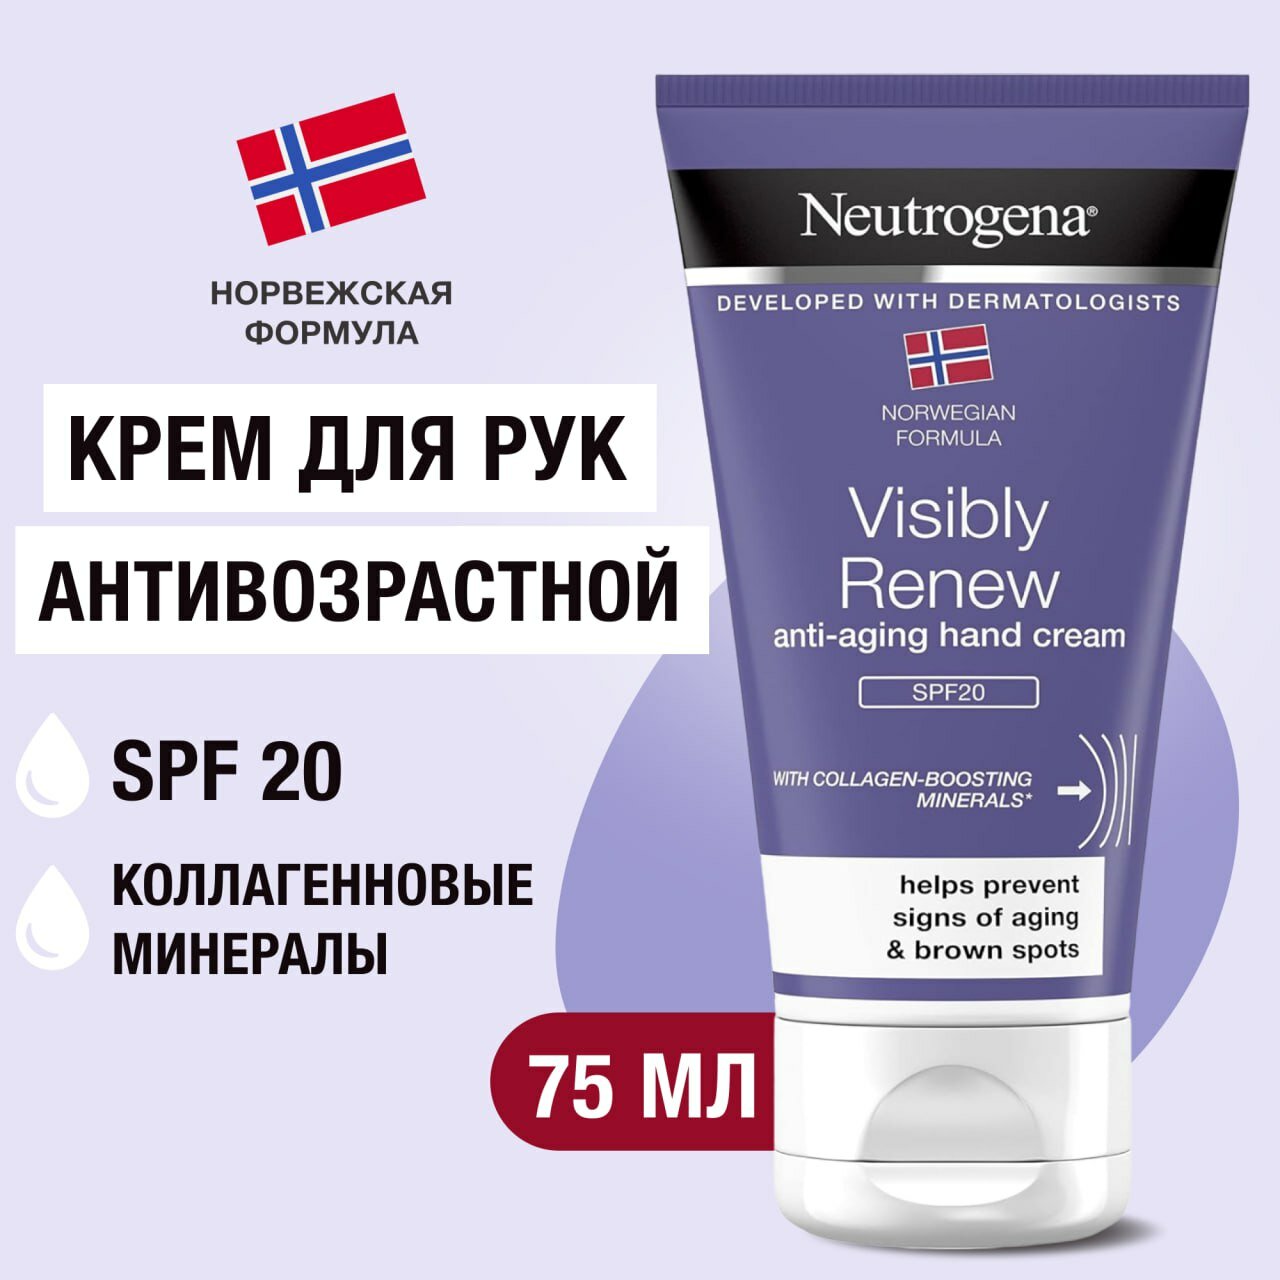 Крем для рук Neutrogena "Visibly Renew" Норвежская формула, солнцезащитный крем для рук Нитроджина SPF20 увлажняющий, без запаха, 75 мл